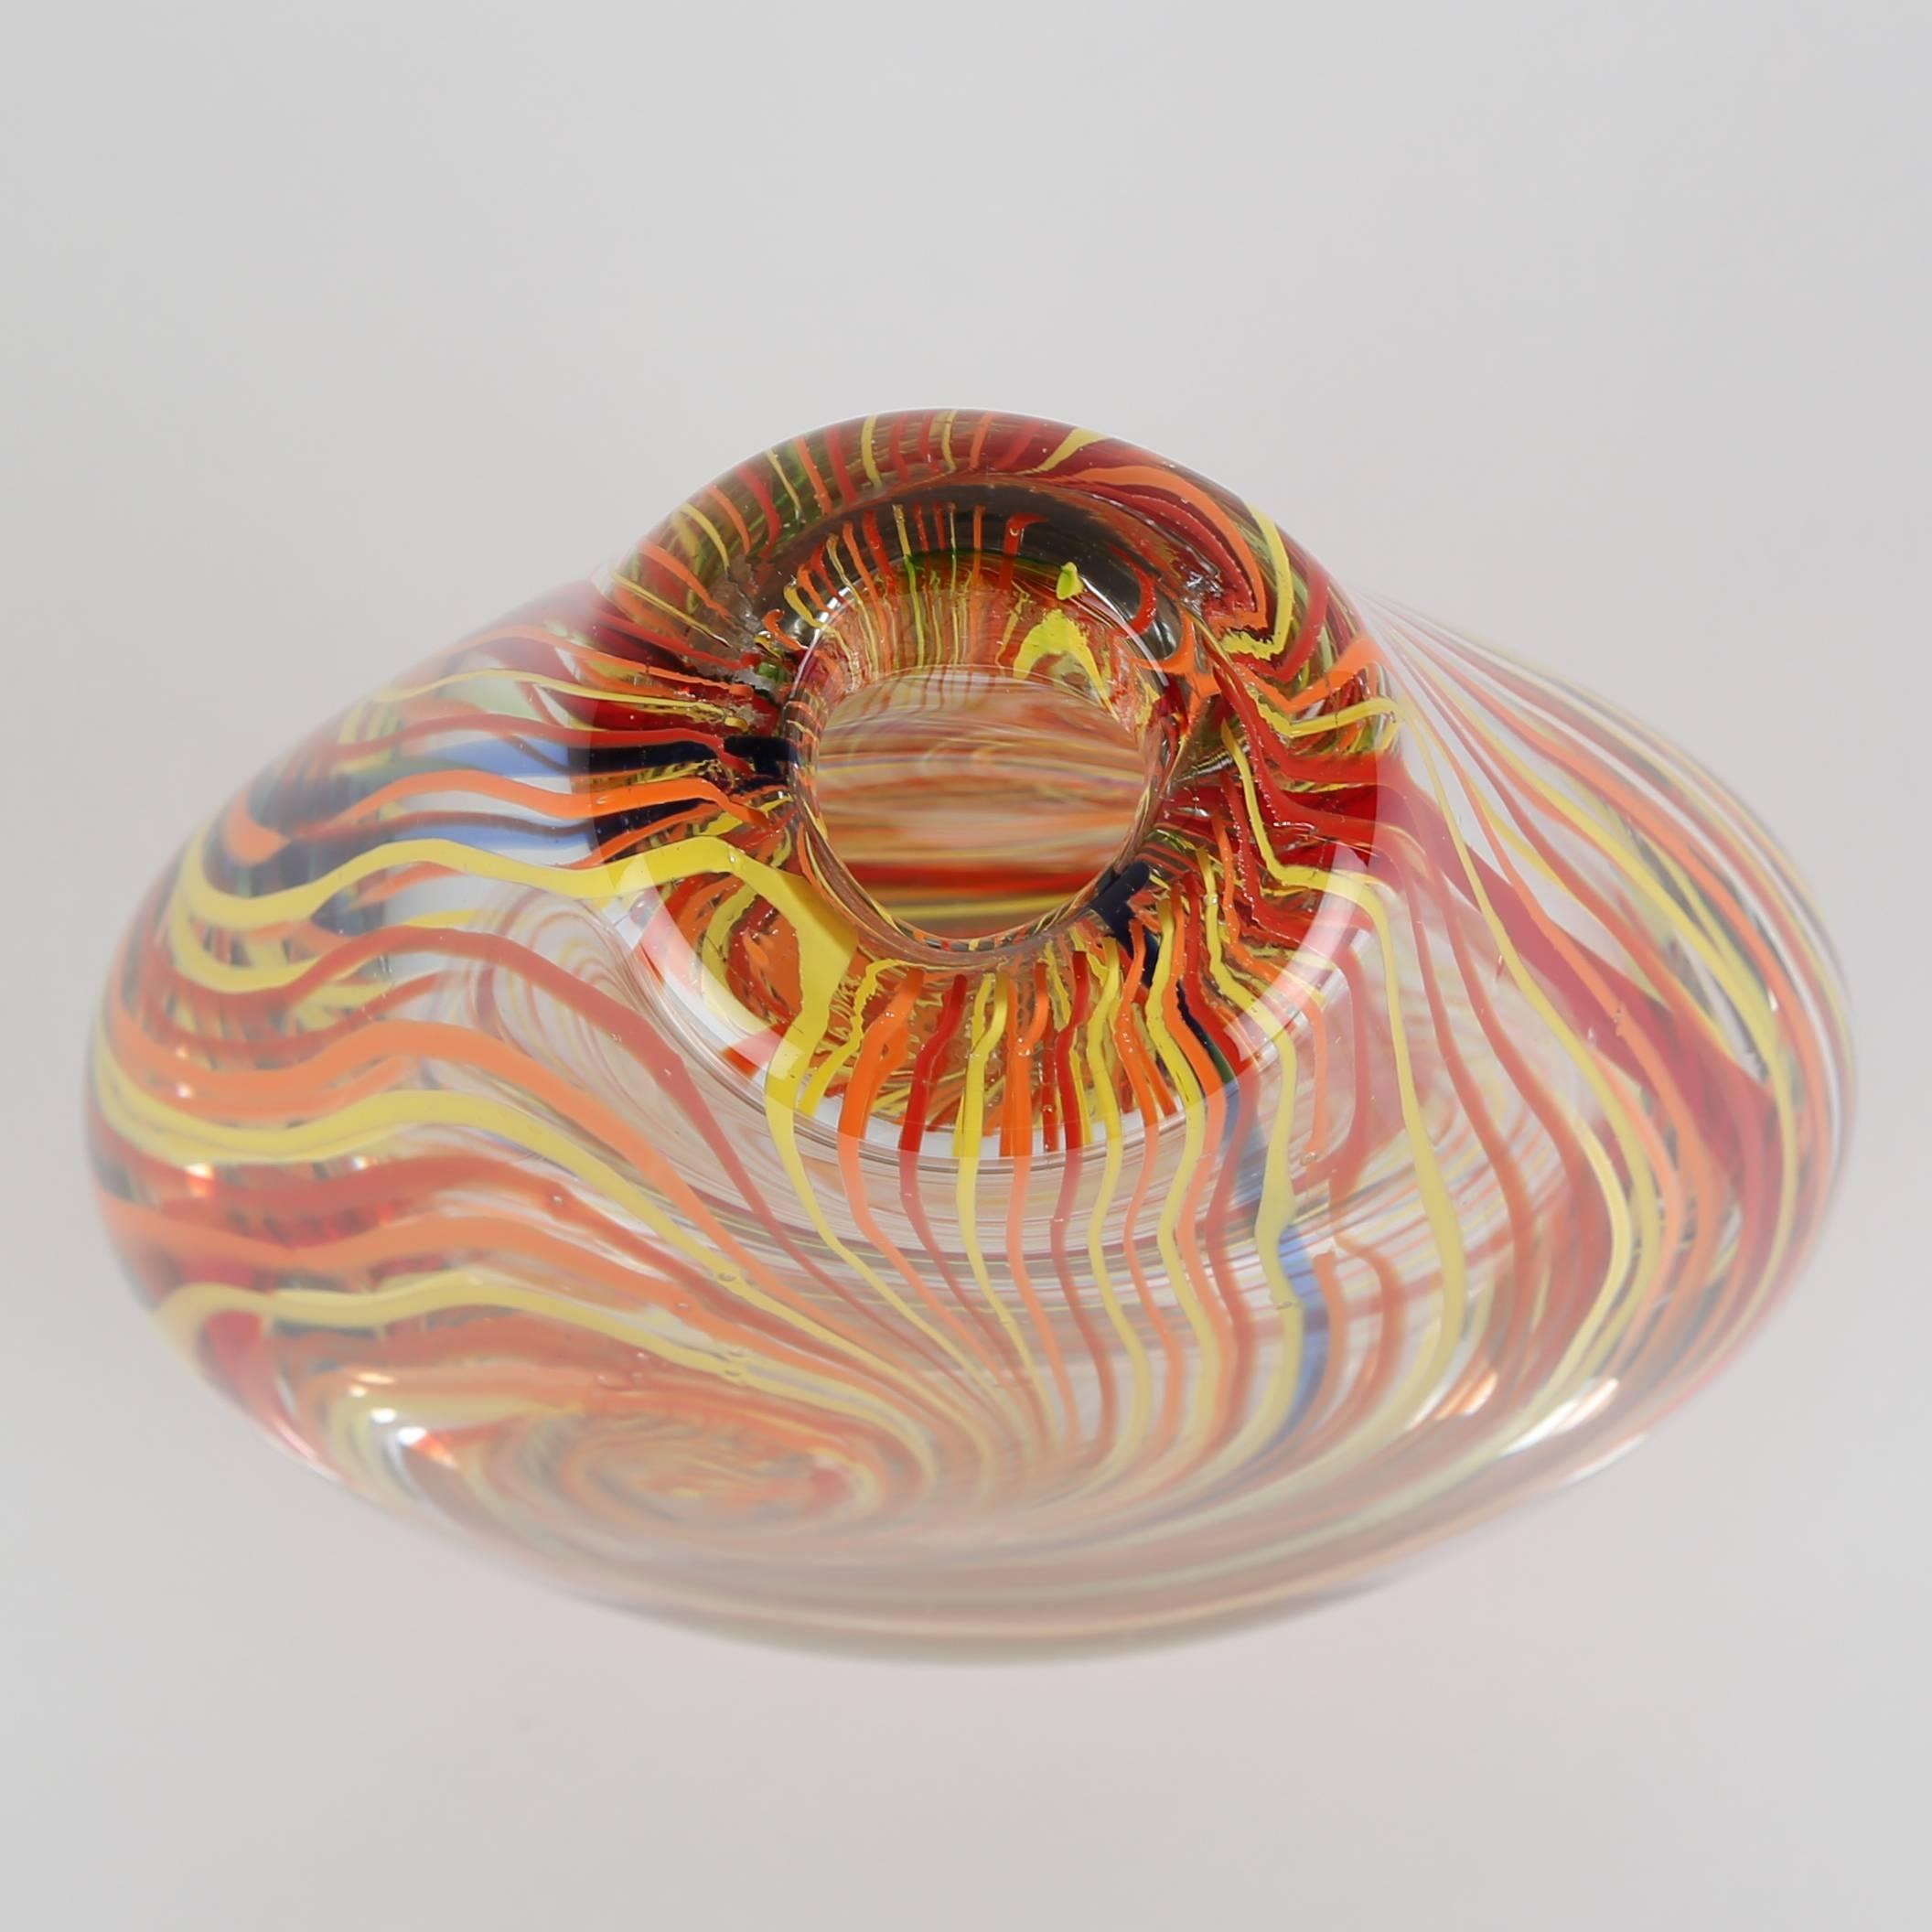 Mid-20th Century Murano 1960s Art Glass Vase with Swirls of Orange, Red, Yellow and Blue